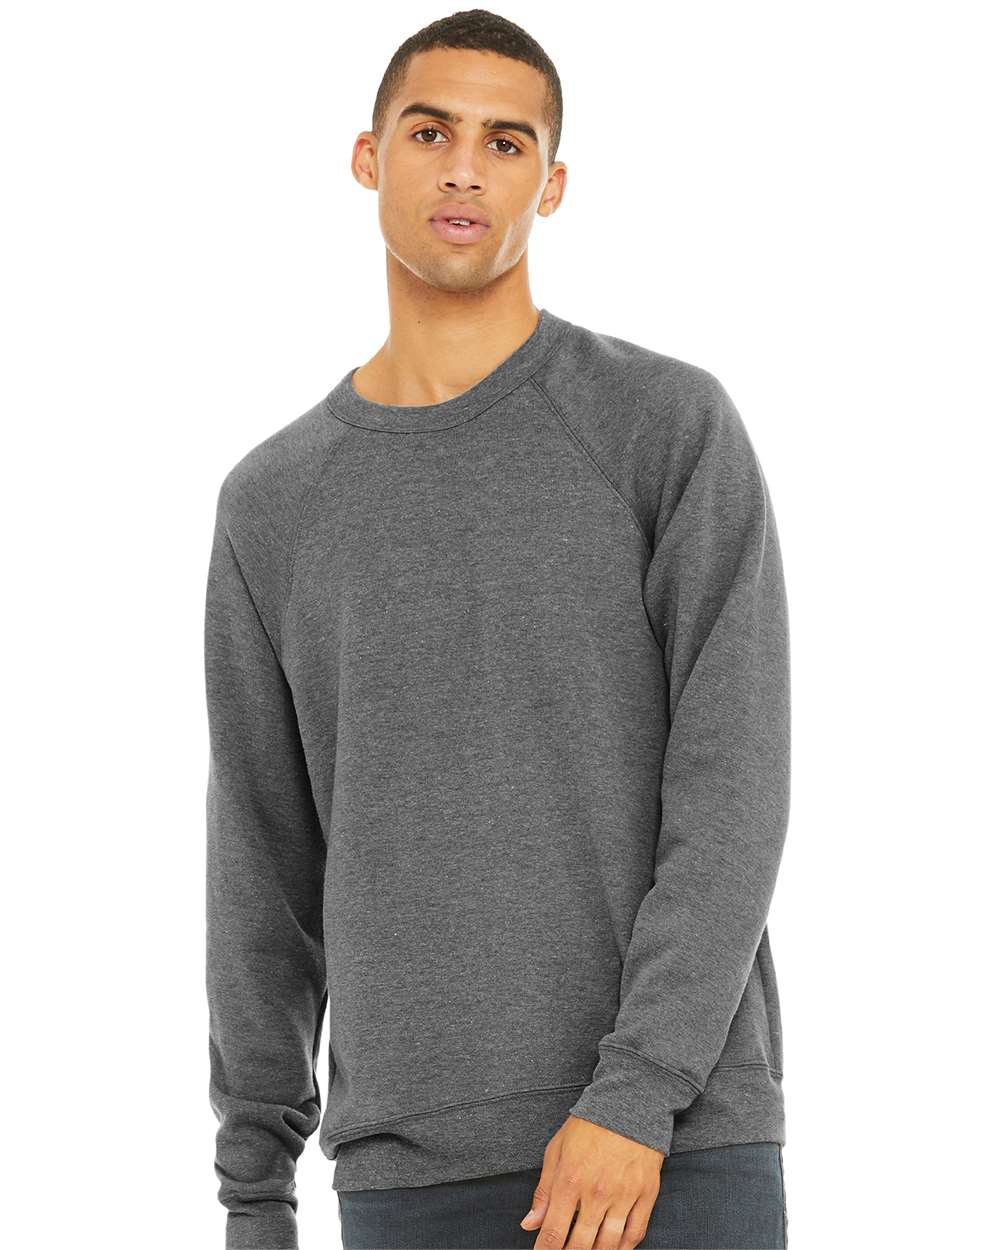 Bella + Canvas Fleece Crewneck Sweatshirt Size XS - Small